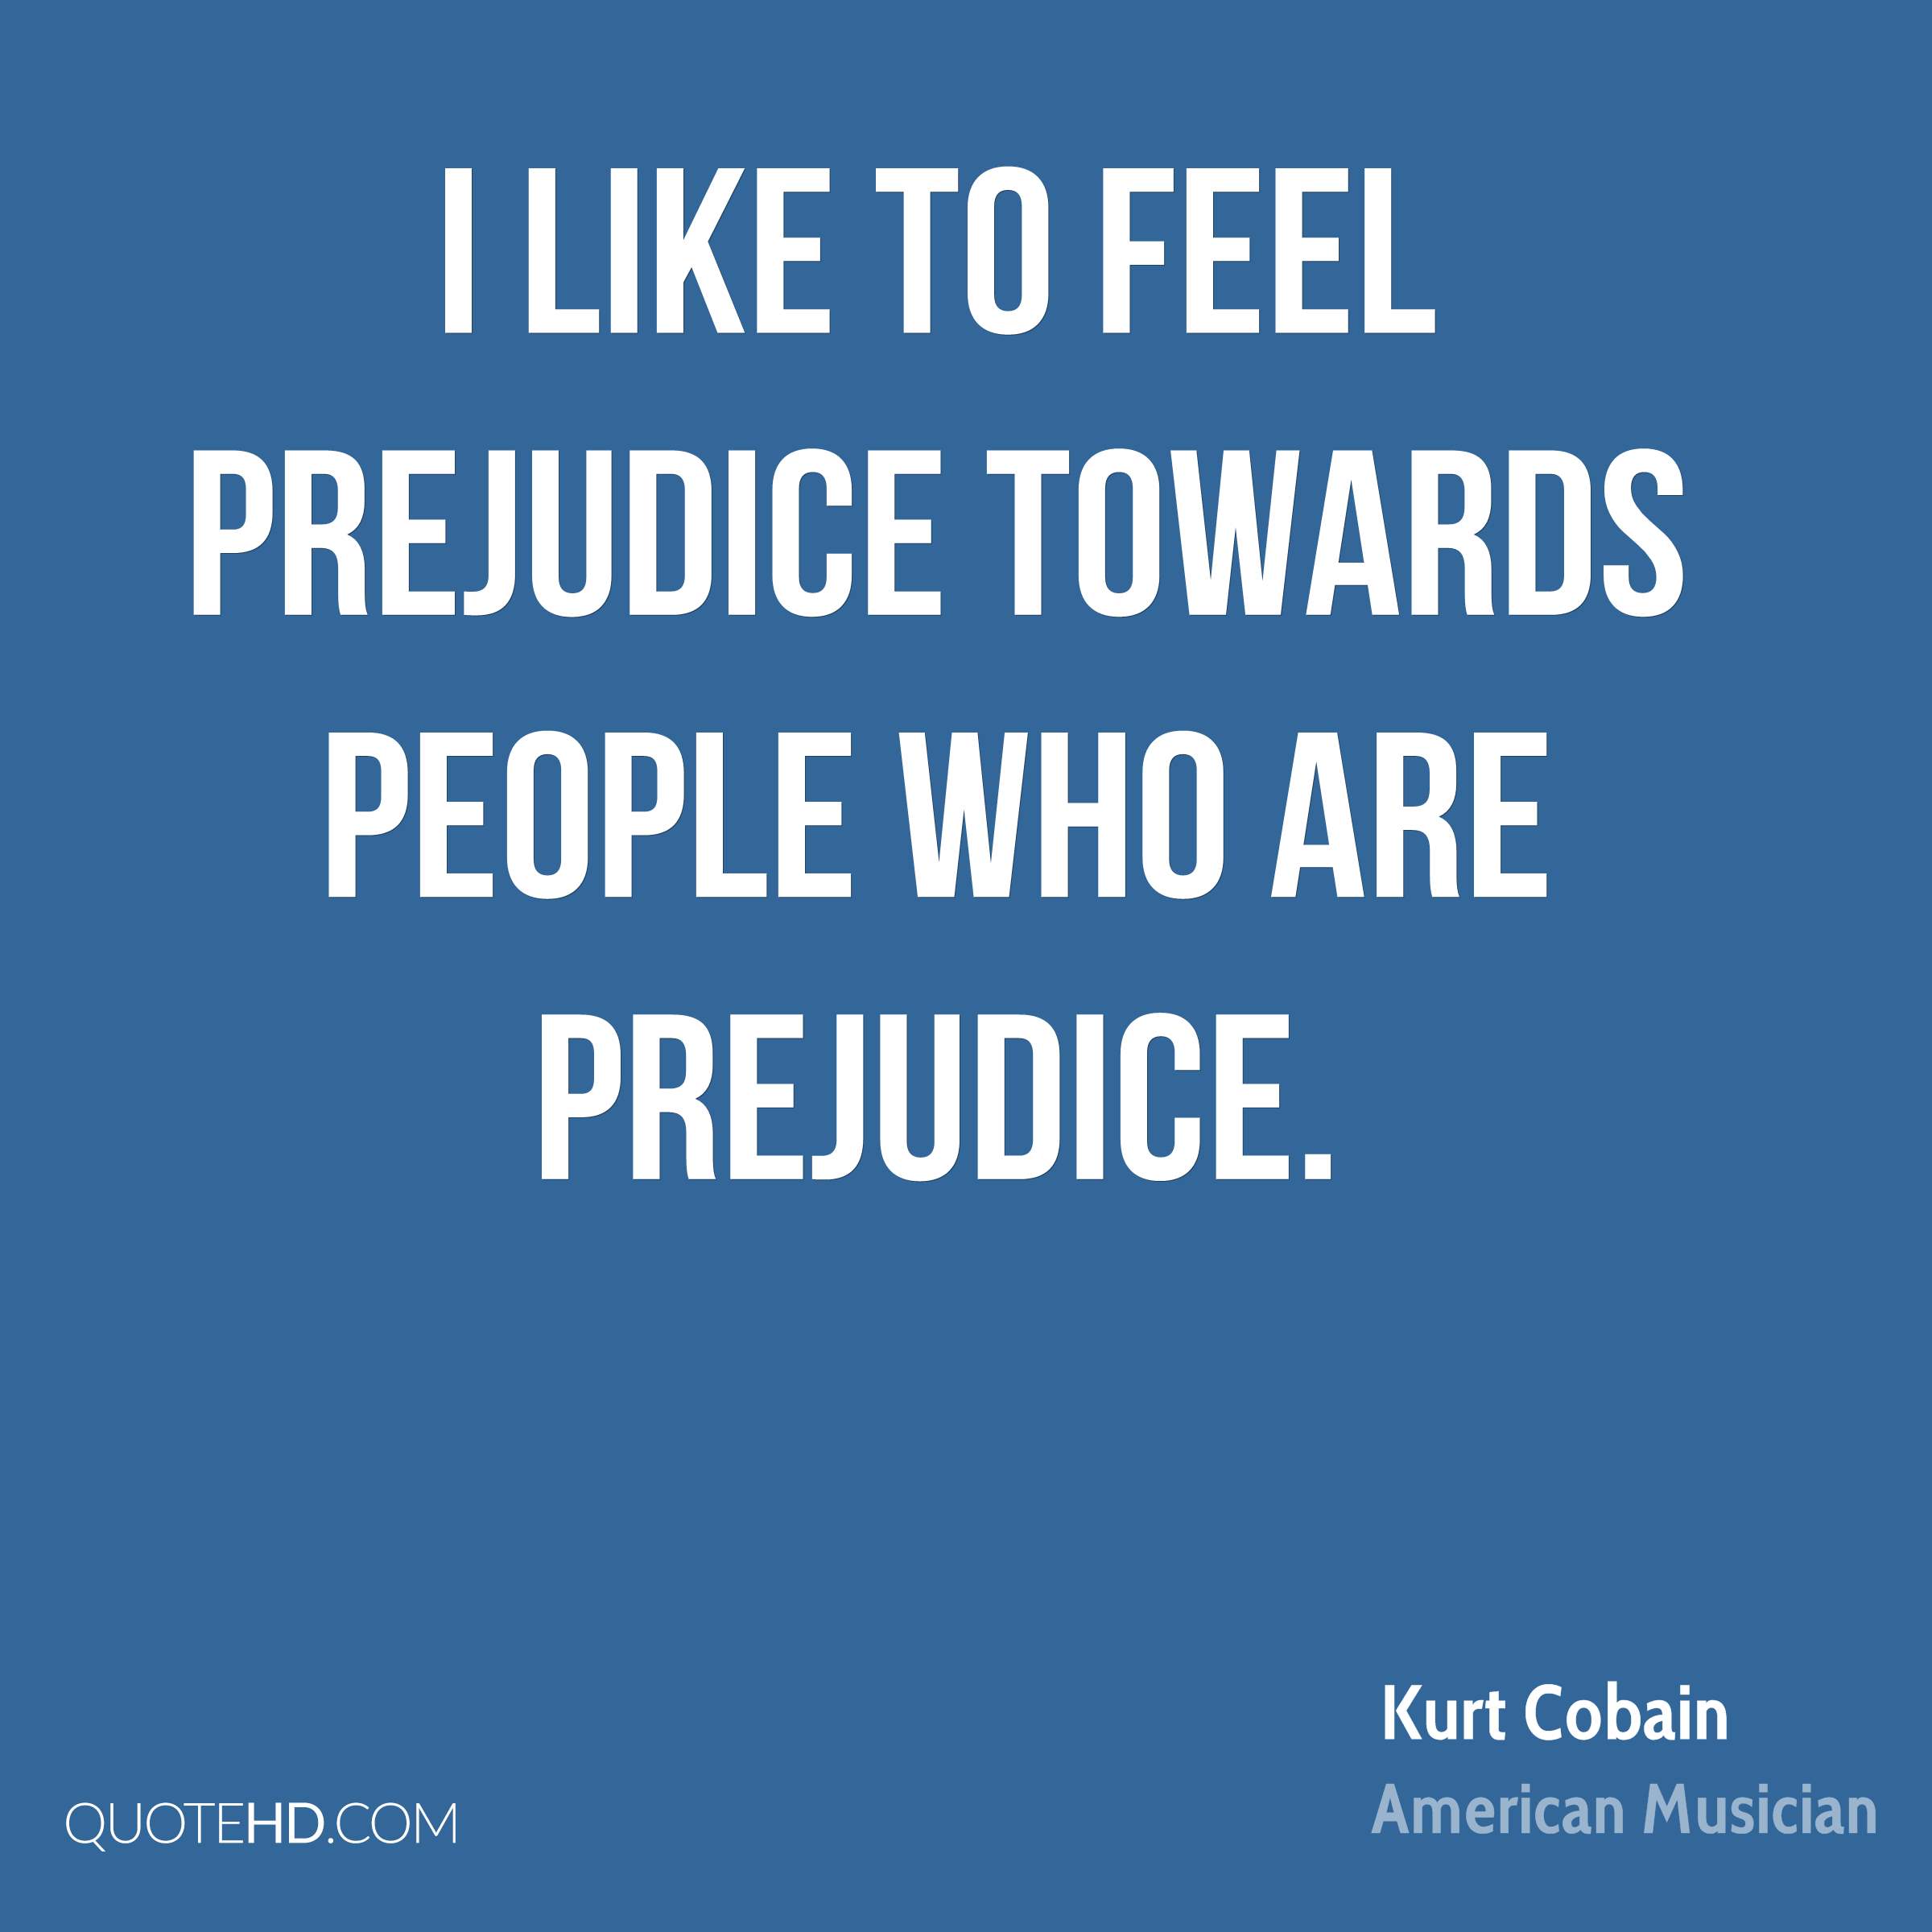 I like to feel prejudice towards people who are prejudice. Kurt Cobain